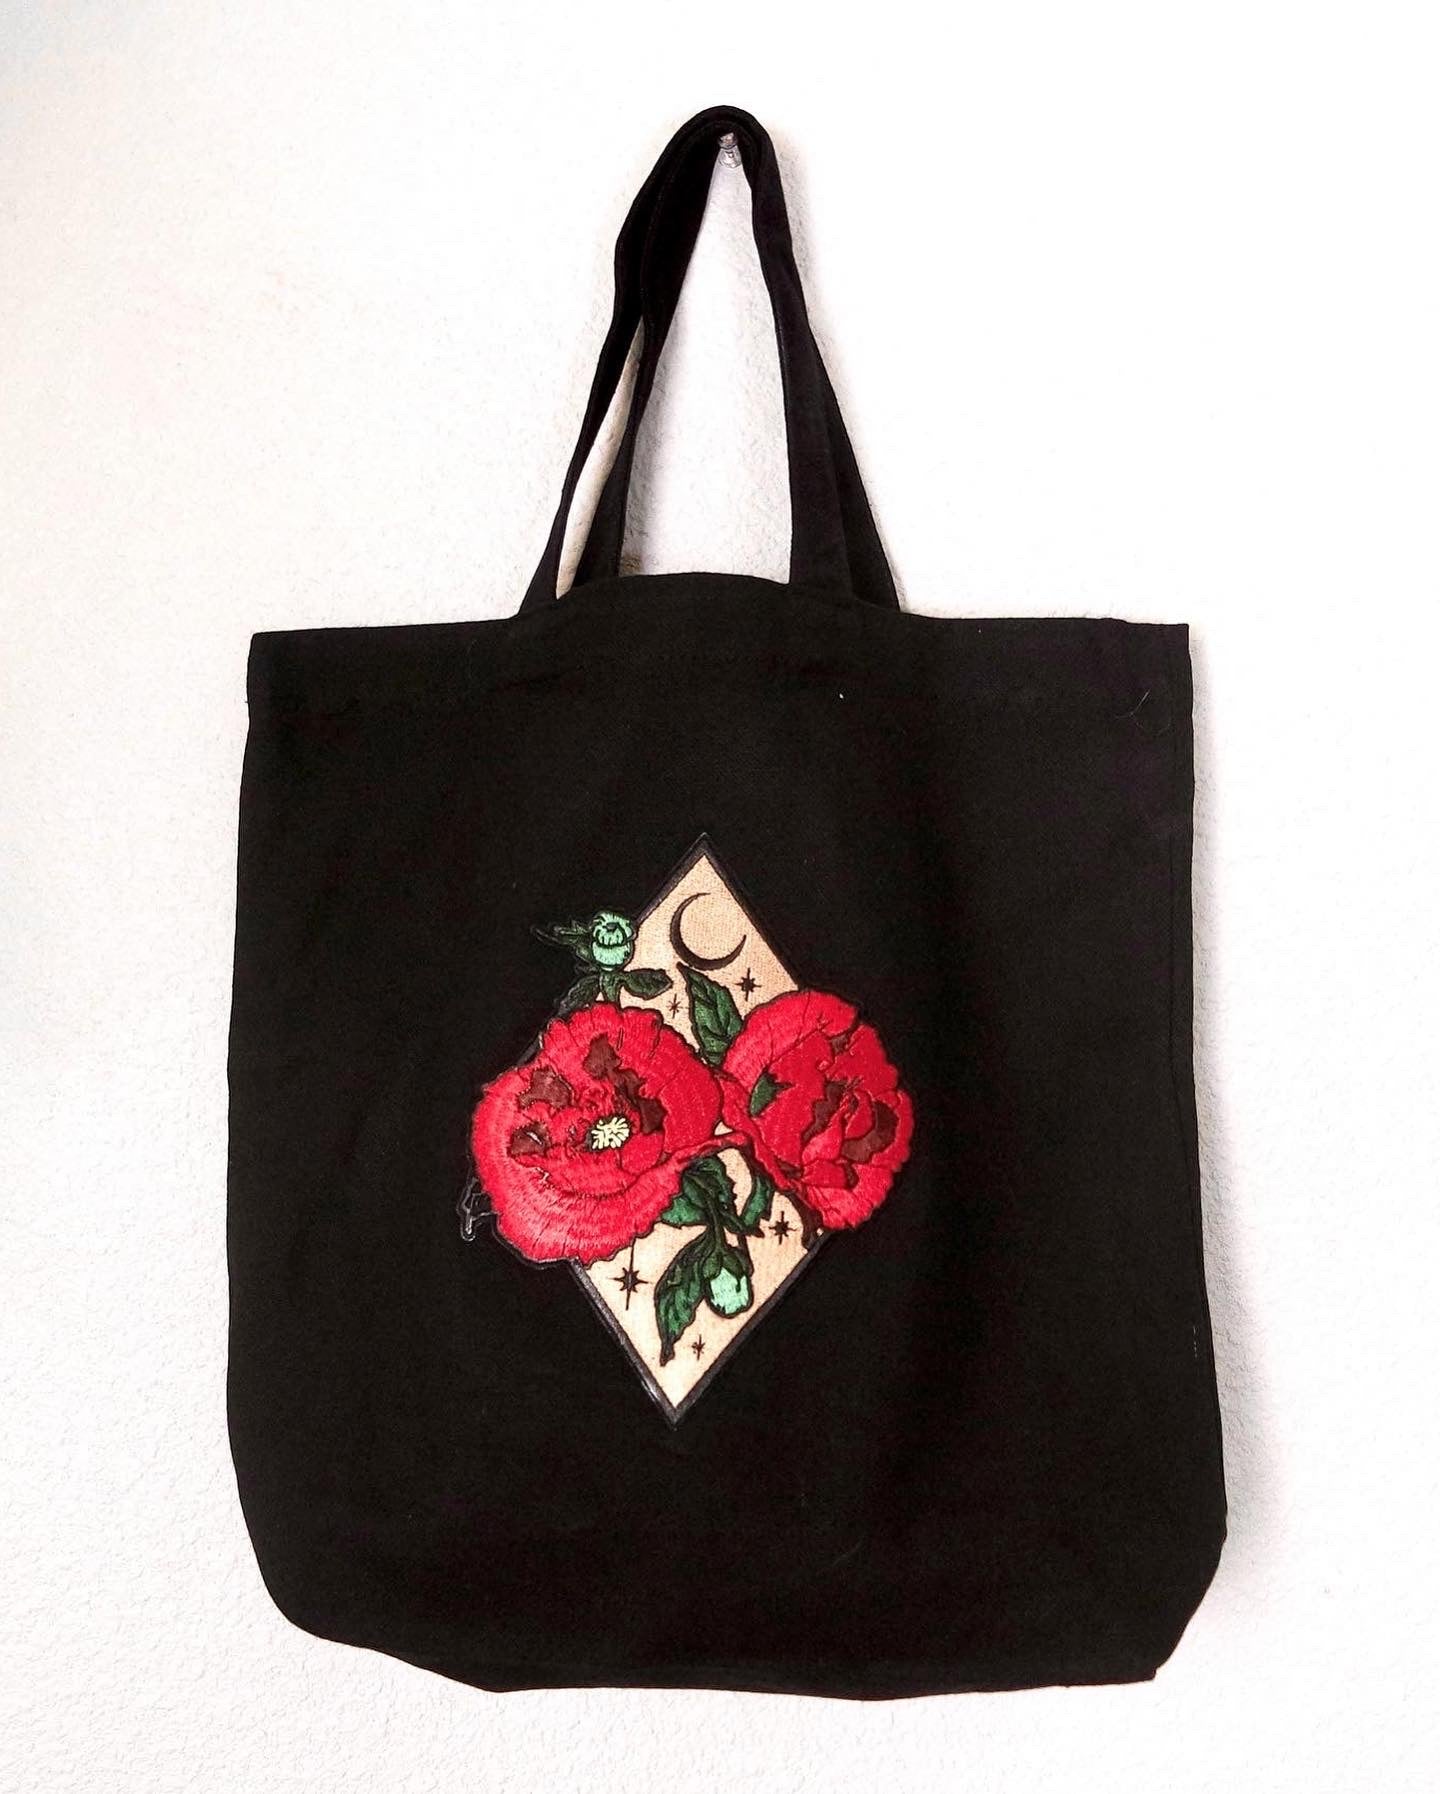 Floral Moon 12” cotton black Tote Bag by Moon Goddess Market - Moon Goddess Market